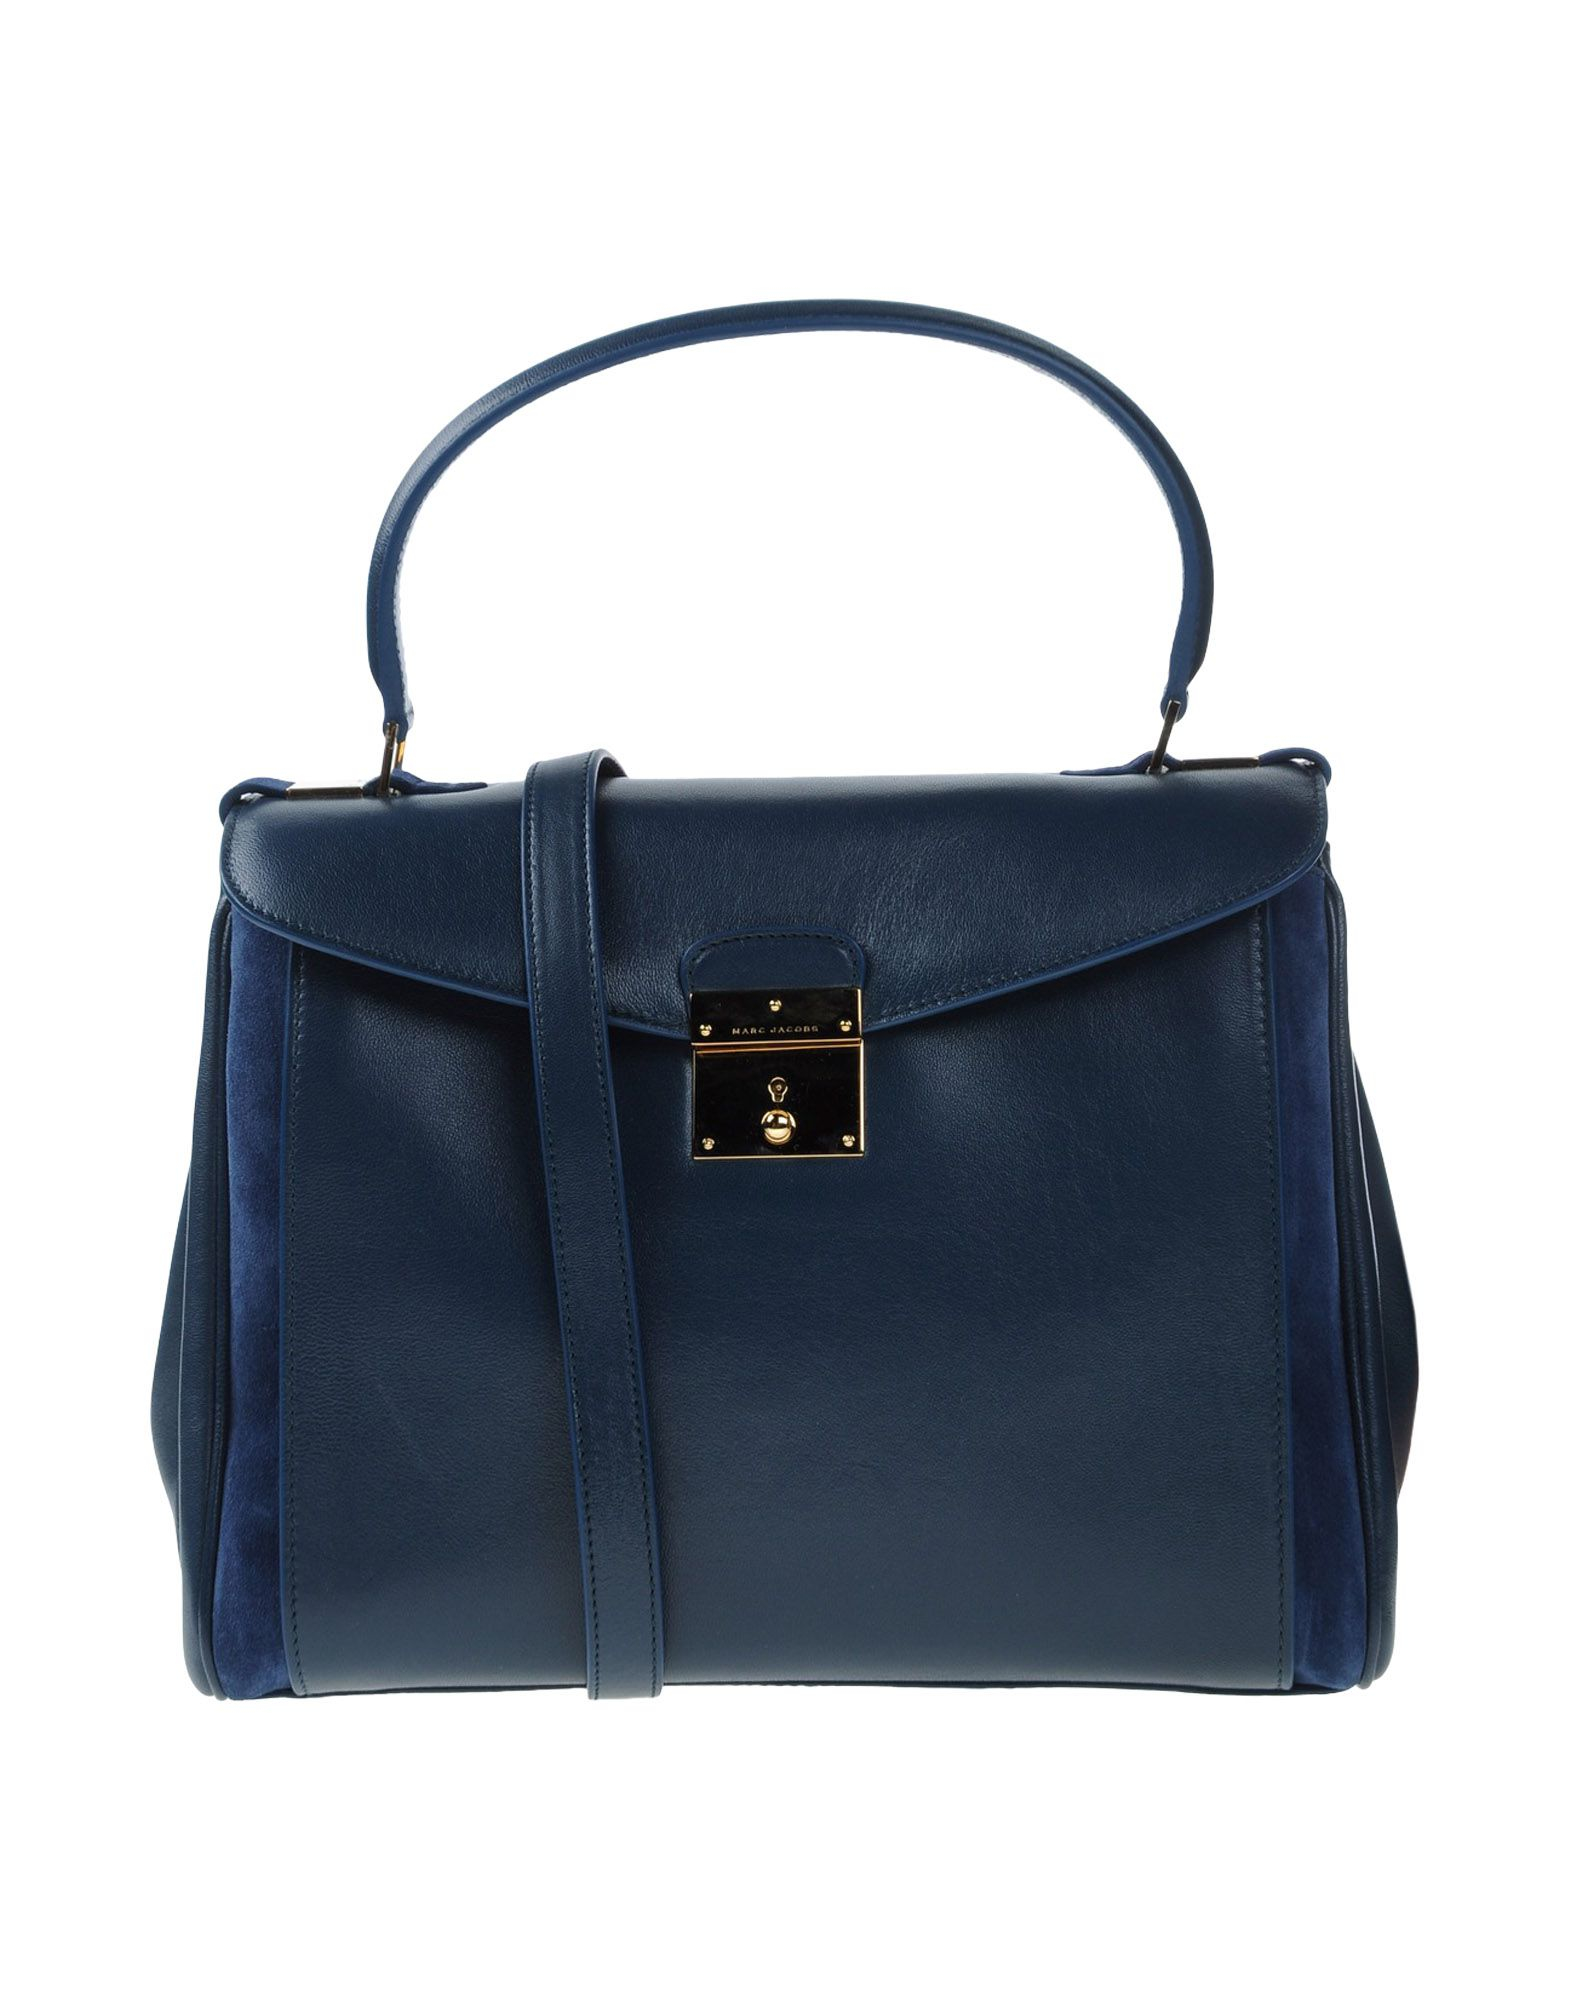 Marc jacobs Handbag in Blue (Slate blue) | Lyst